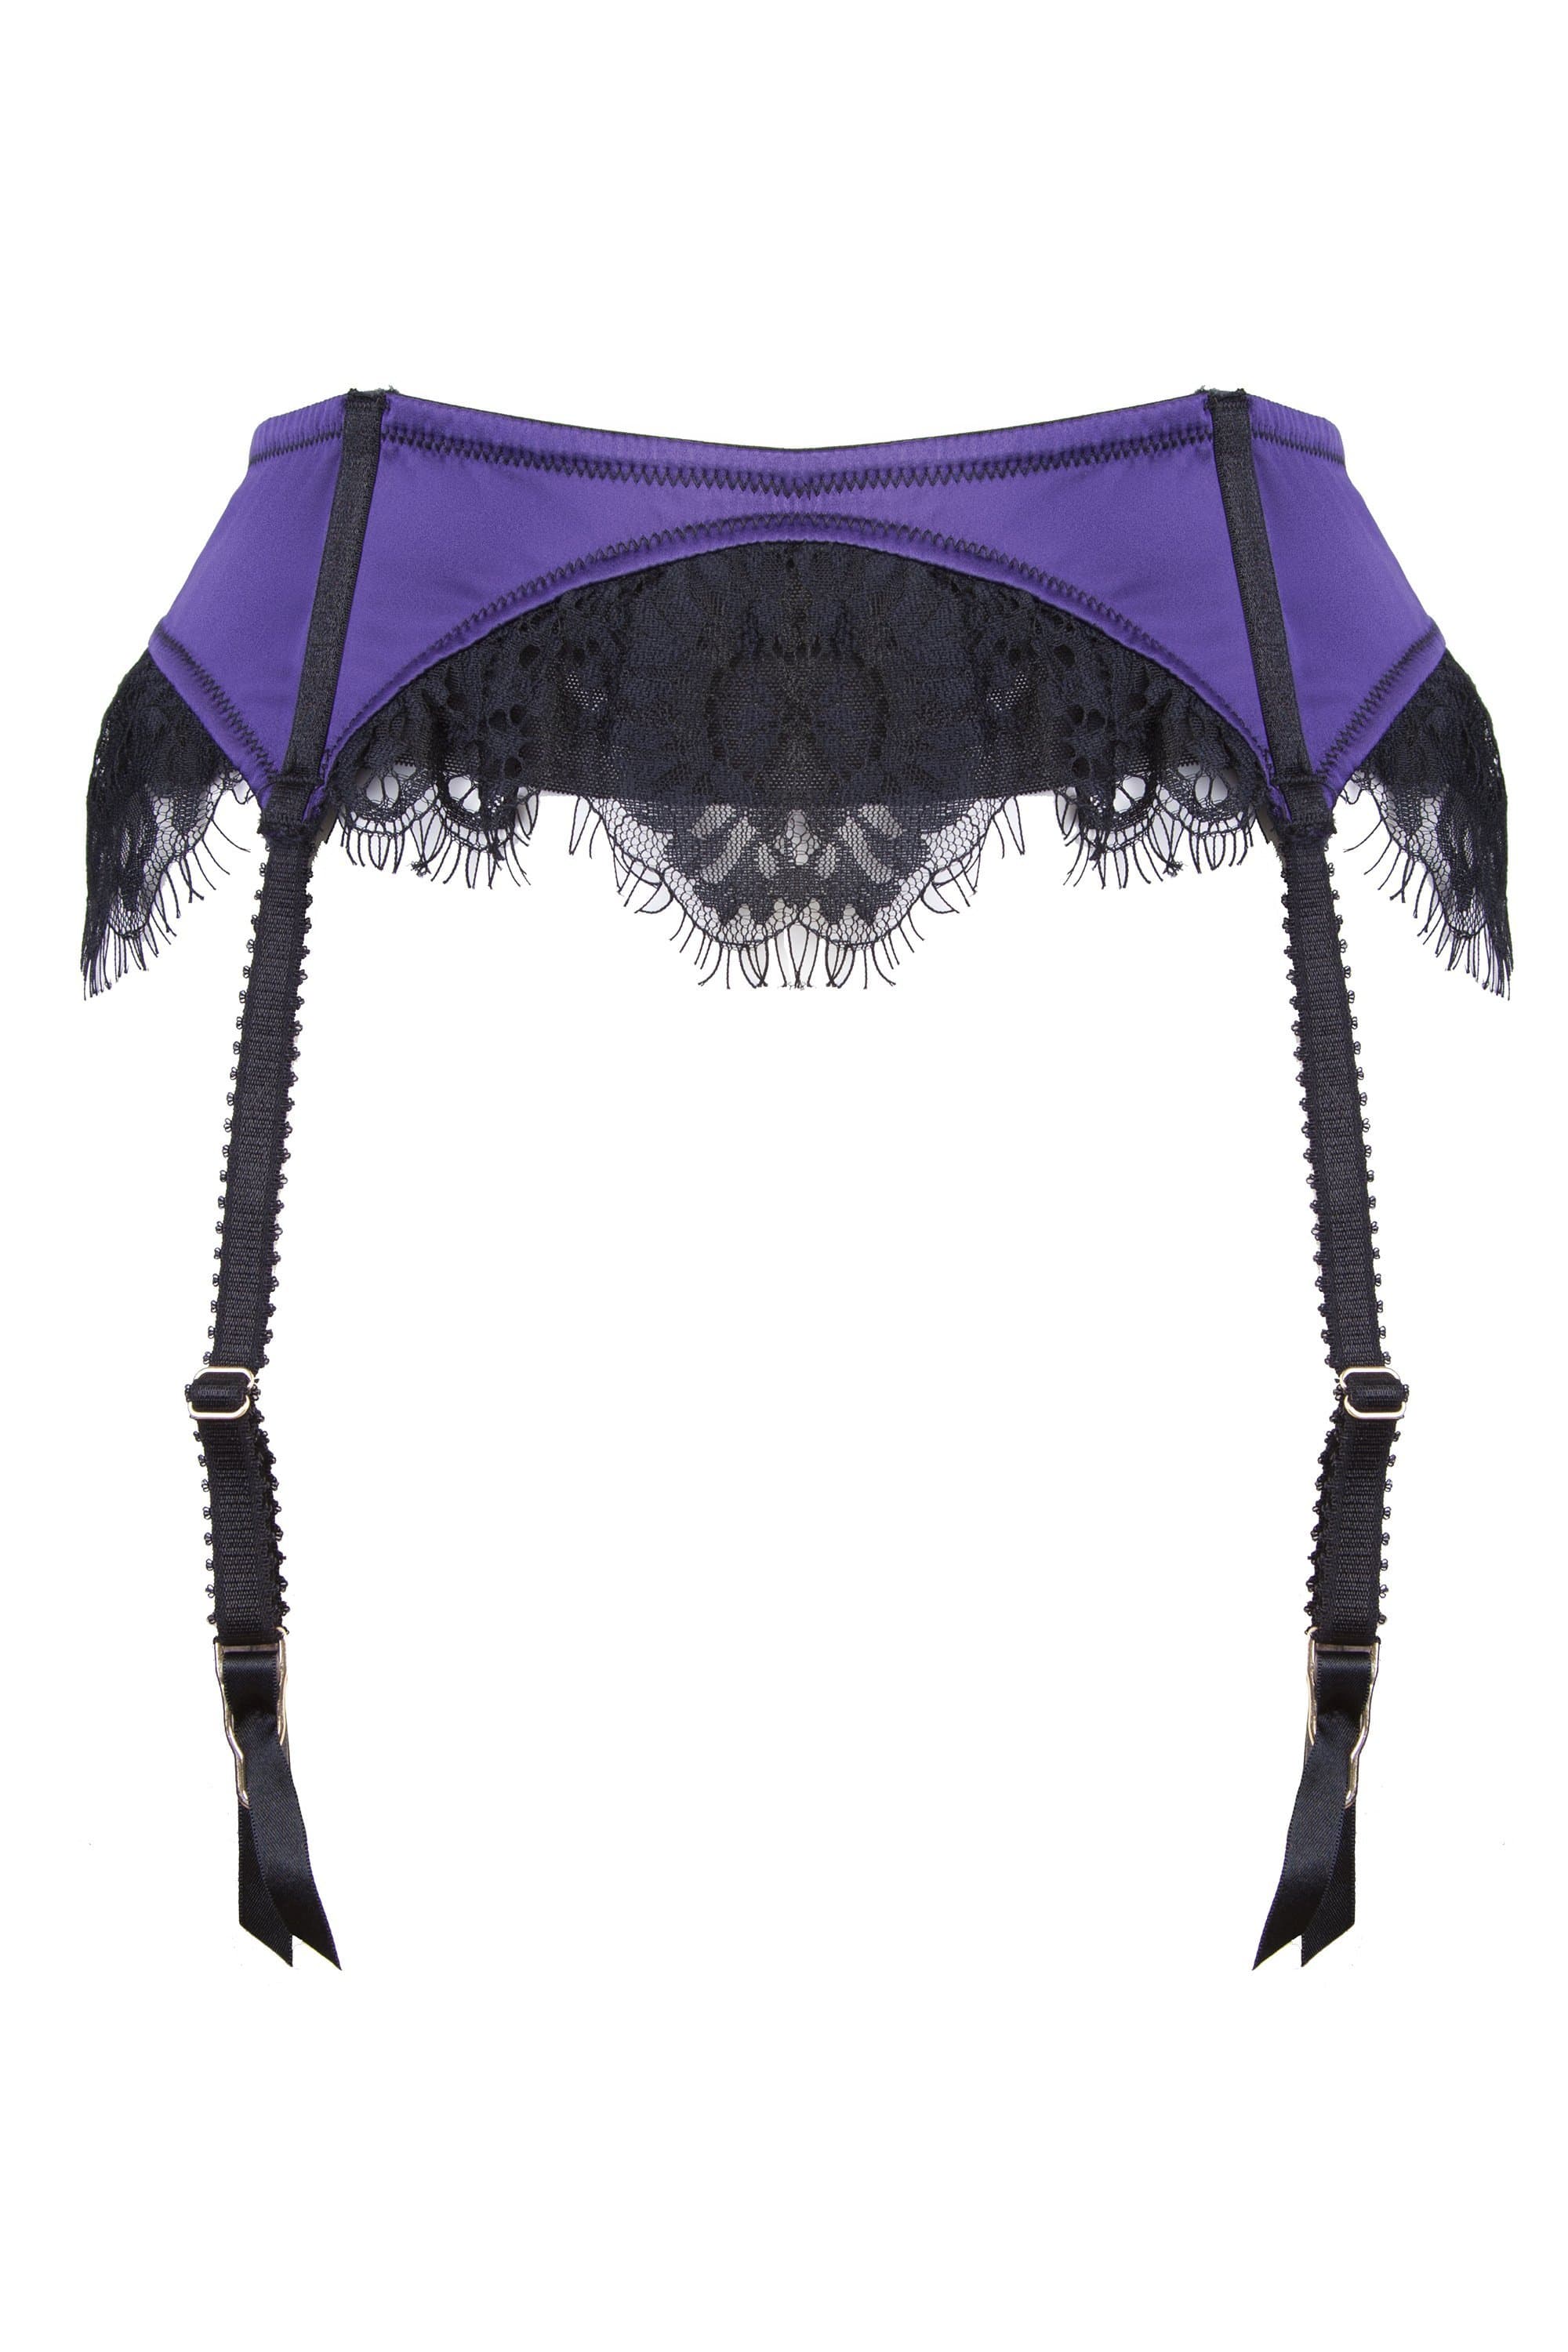 Sheba Purple Lace Suspender Belt Curve